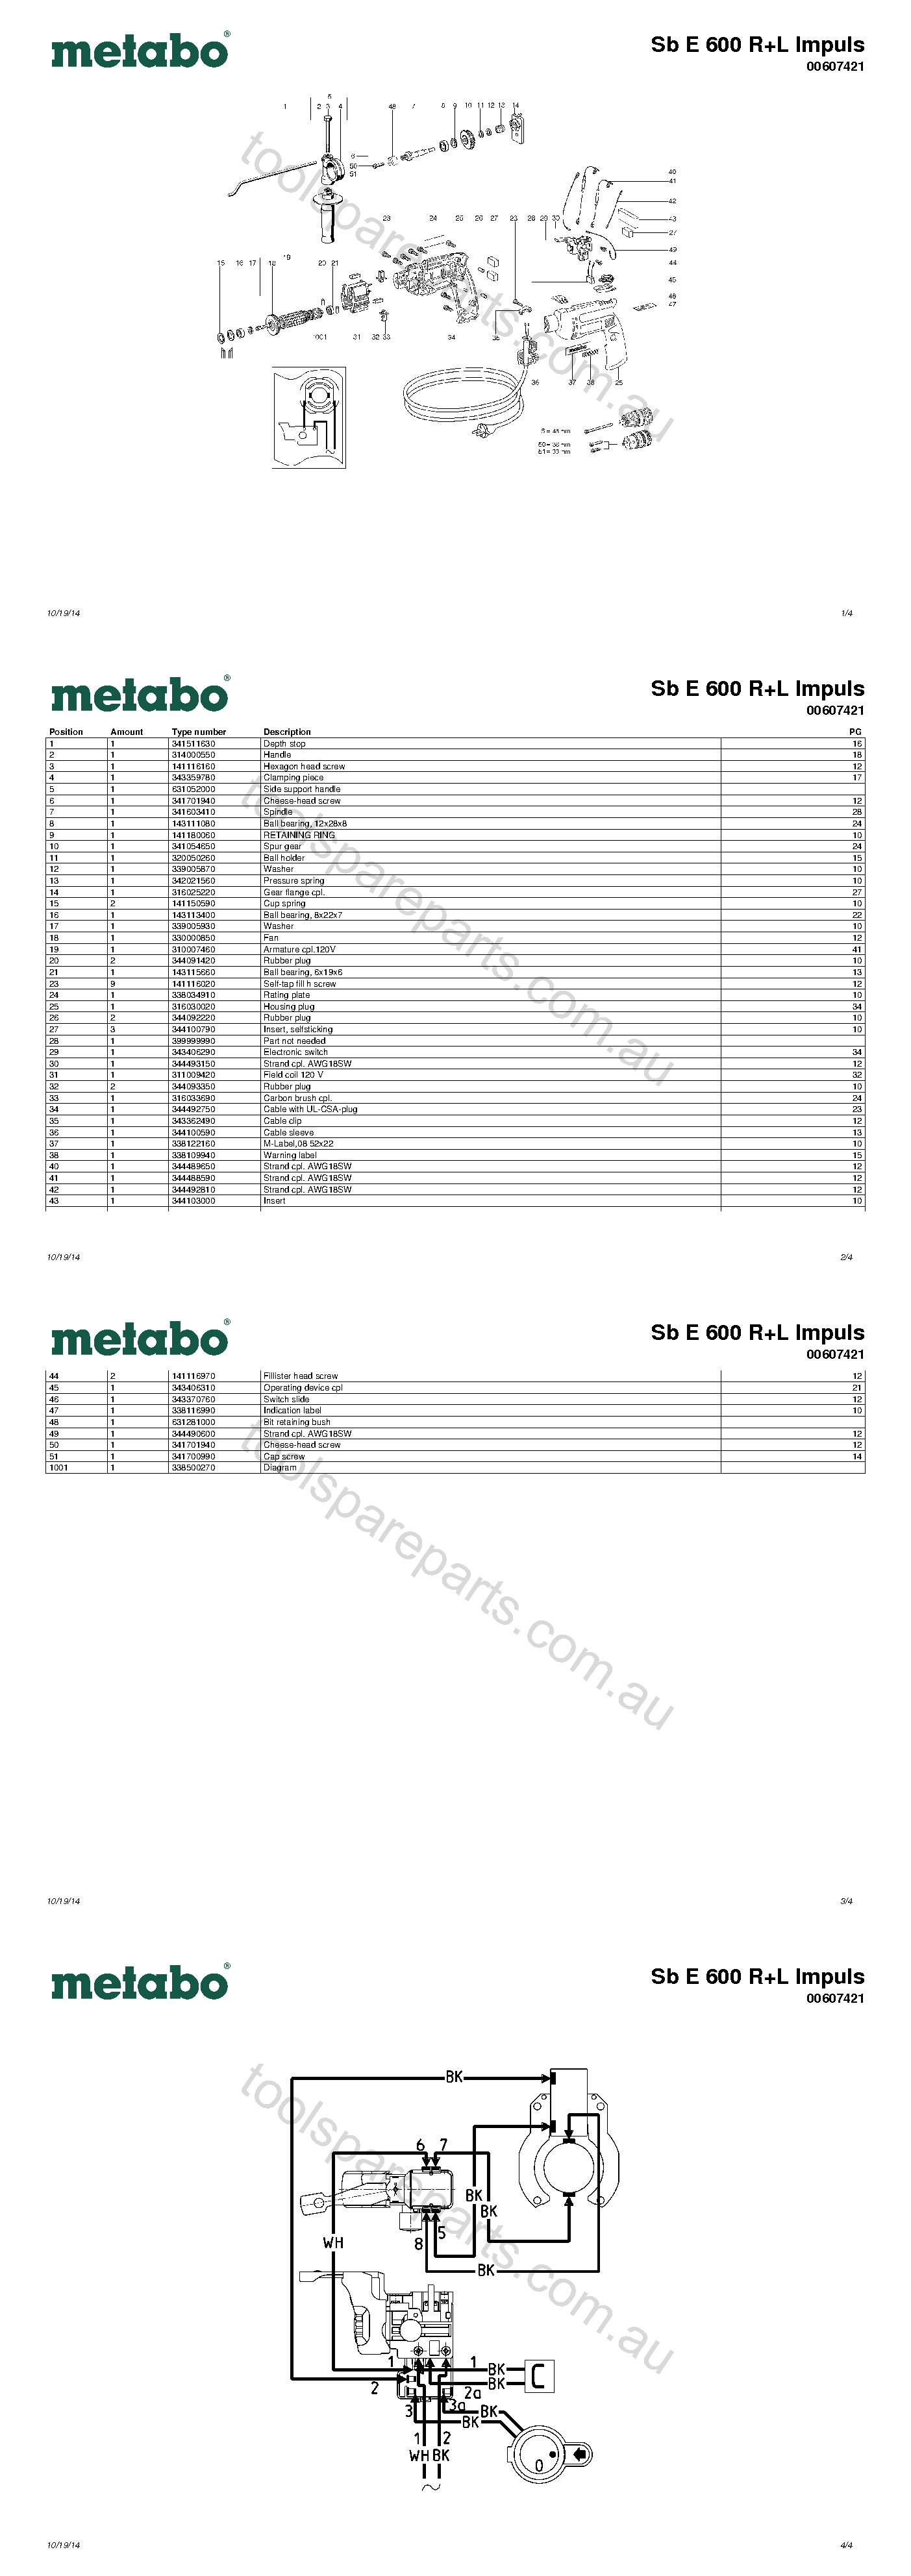 Metabo Sb E 600 R+L Impuls 00607421  Diagram 1